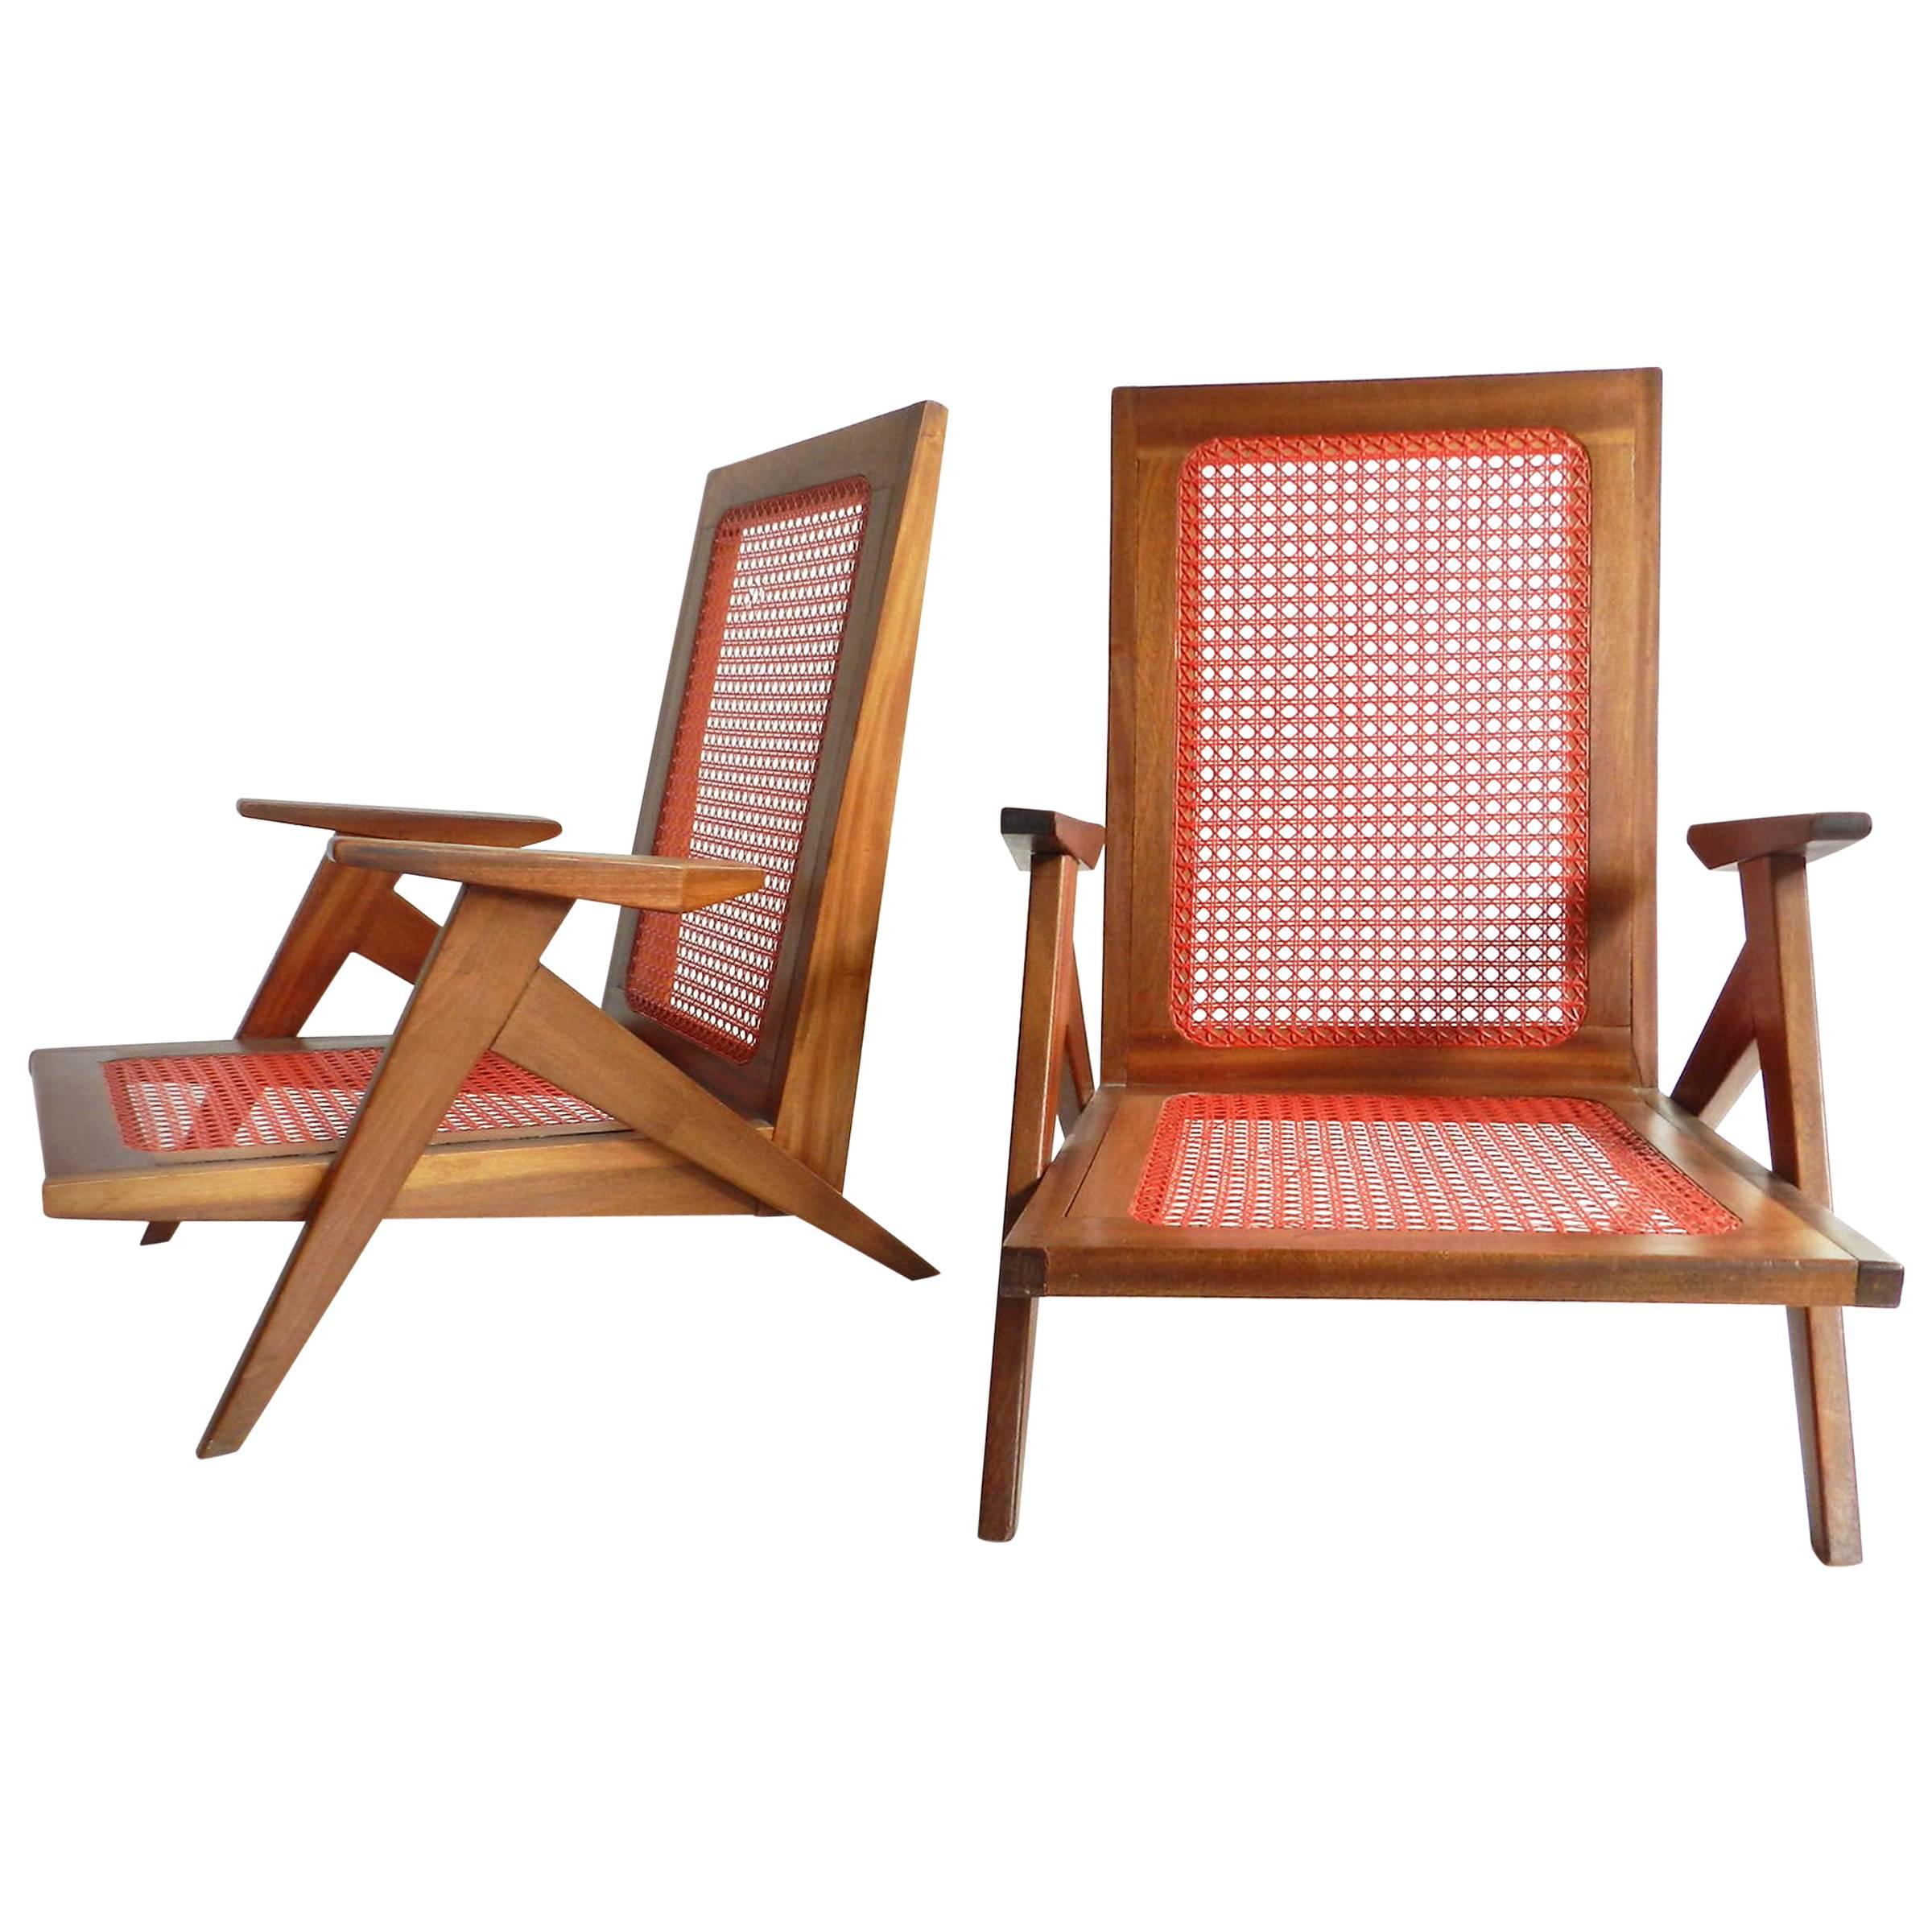 Marvelous "Veranda" Lounge Chairs